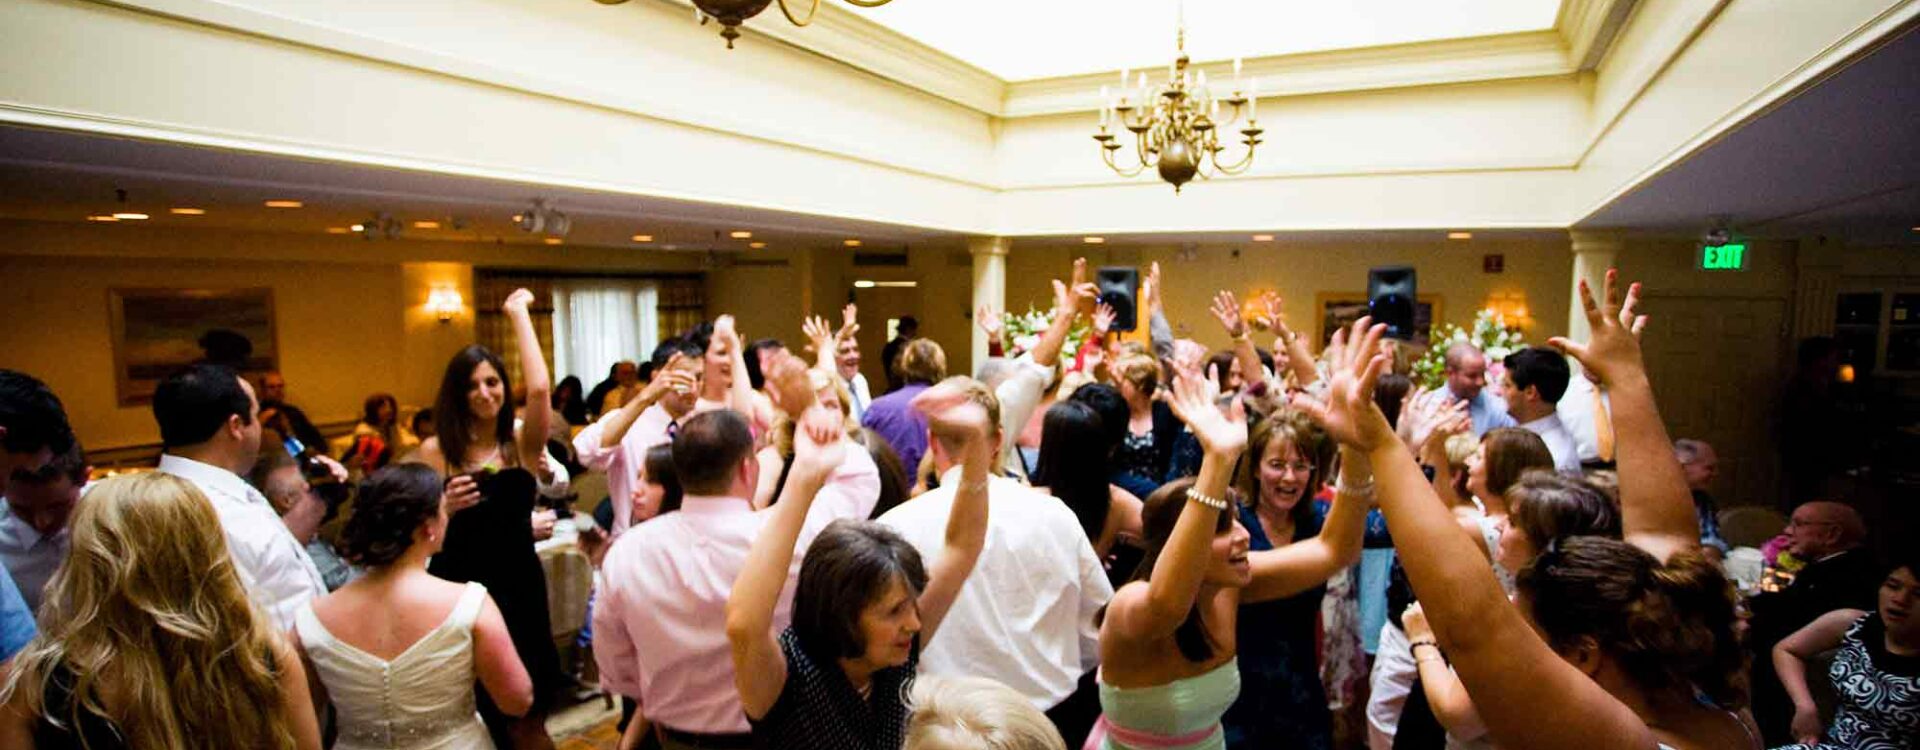 Yorkshire Ballroom Wedding Reception Dance Floor